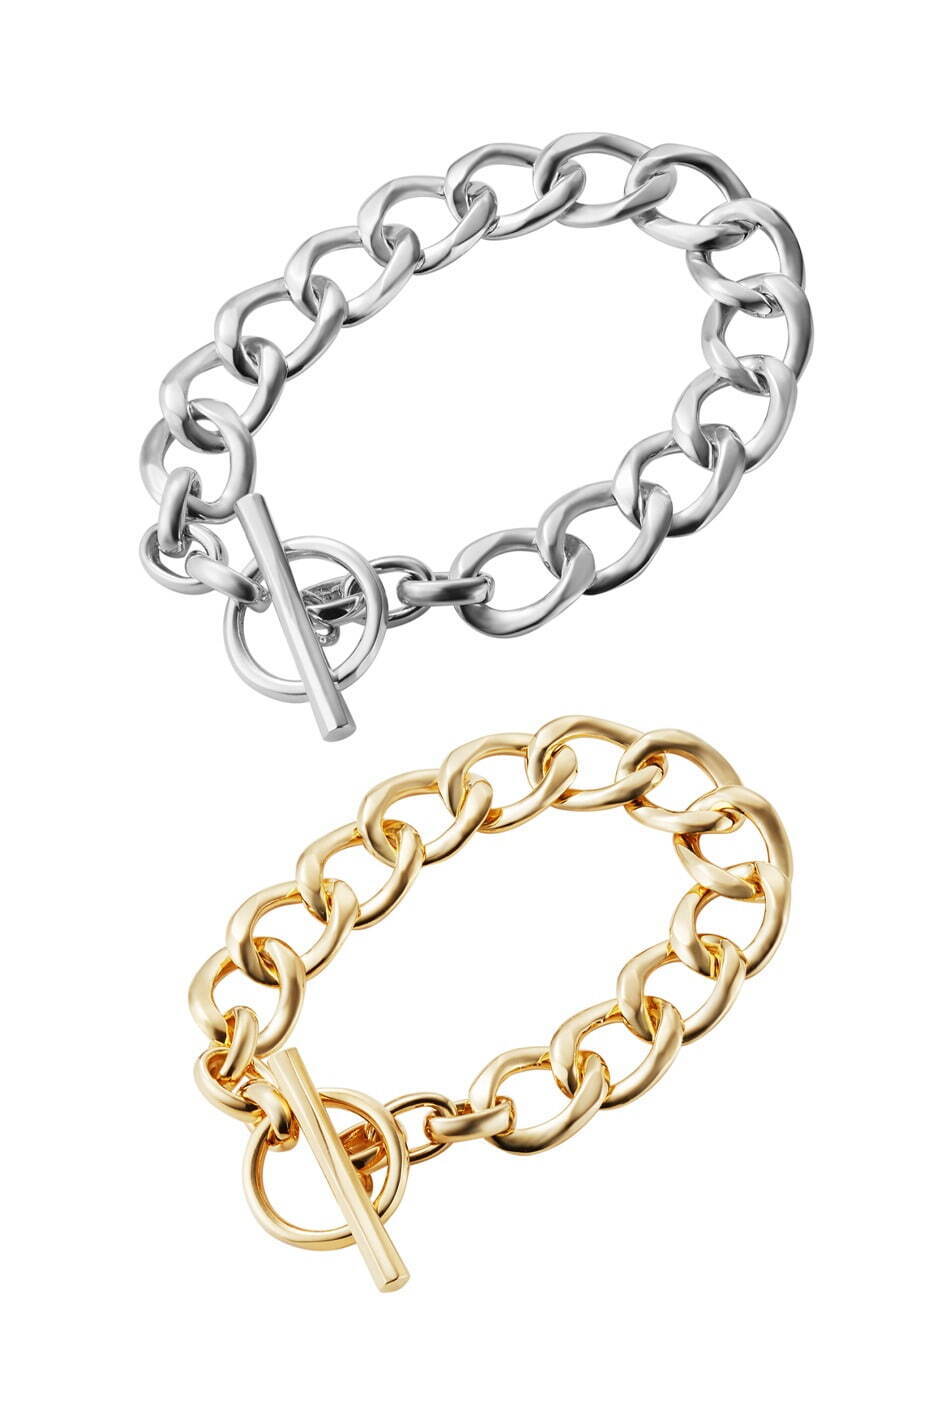 Sei-ma Fit Chain Bracelet
Silver/Long(20cm) 89,100円
Gold/ Short (18cm) 81,400円